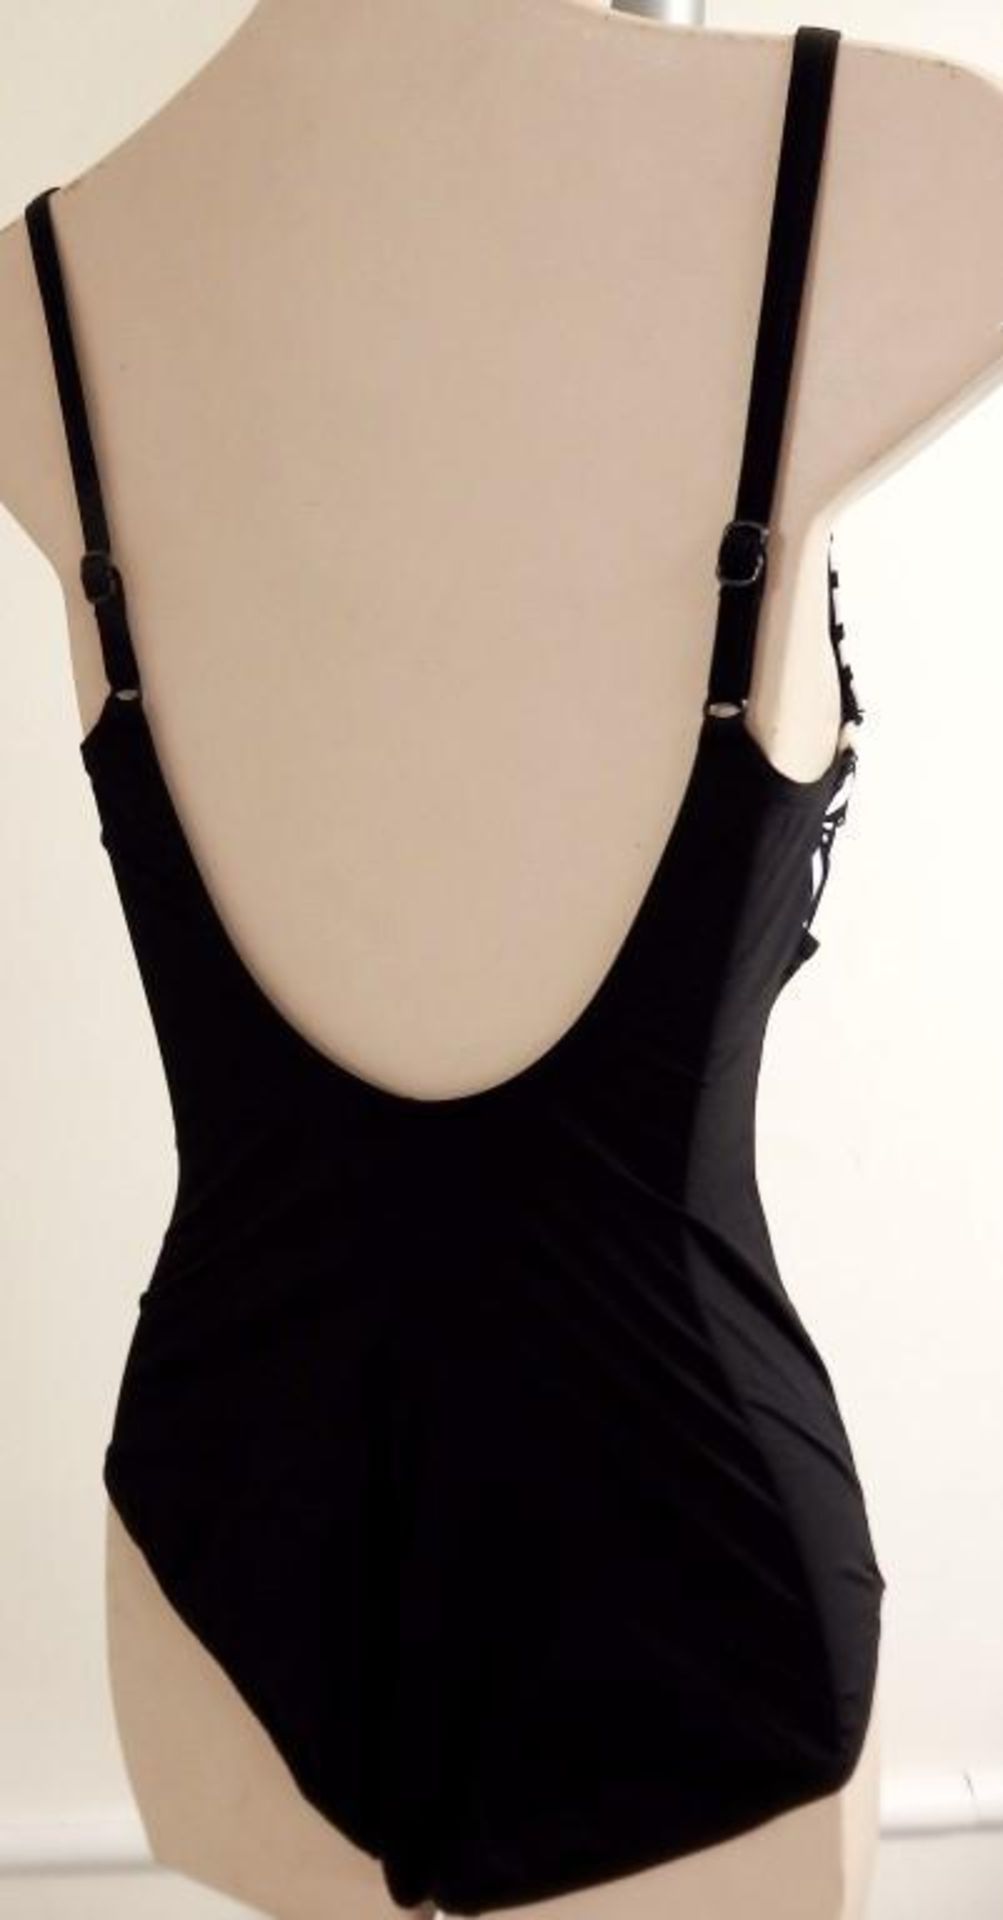 1 x Rasurel - Black/Ecru and vibrant patternedbustier - Cuba Swimsuit - R20738 - Size 2C - UK 32 - - Image 6 of 7